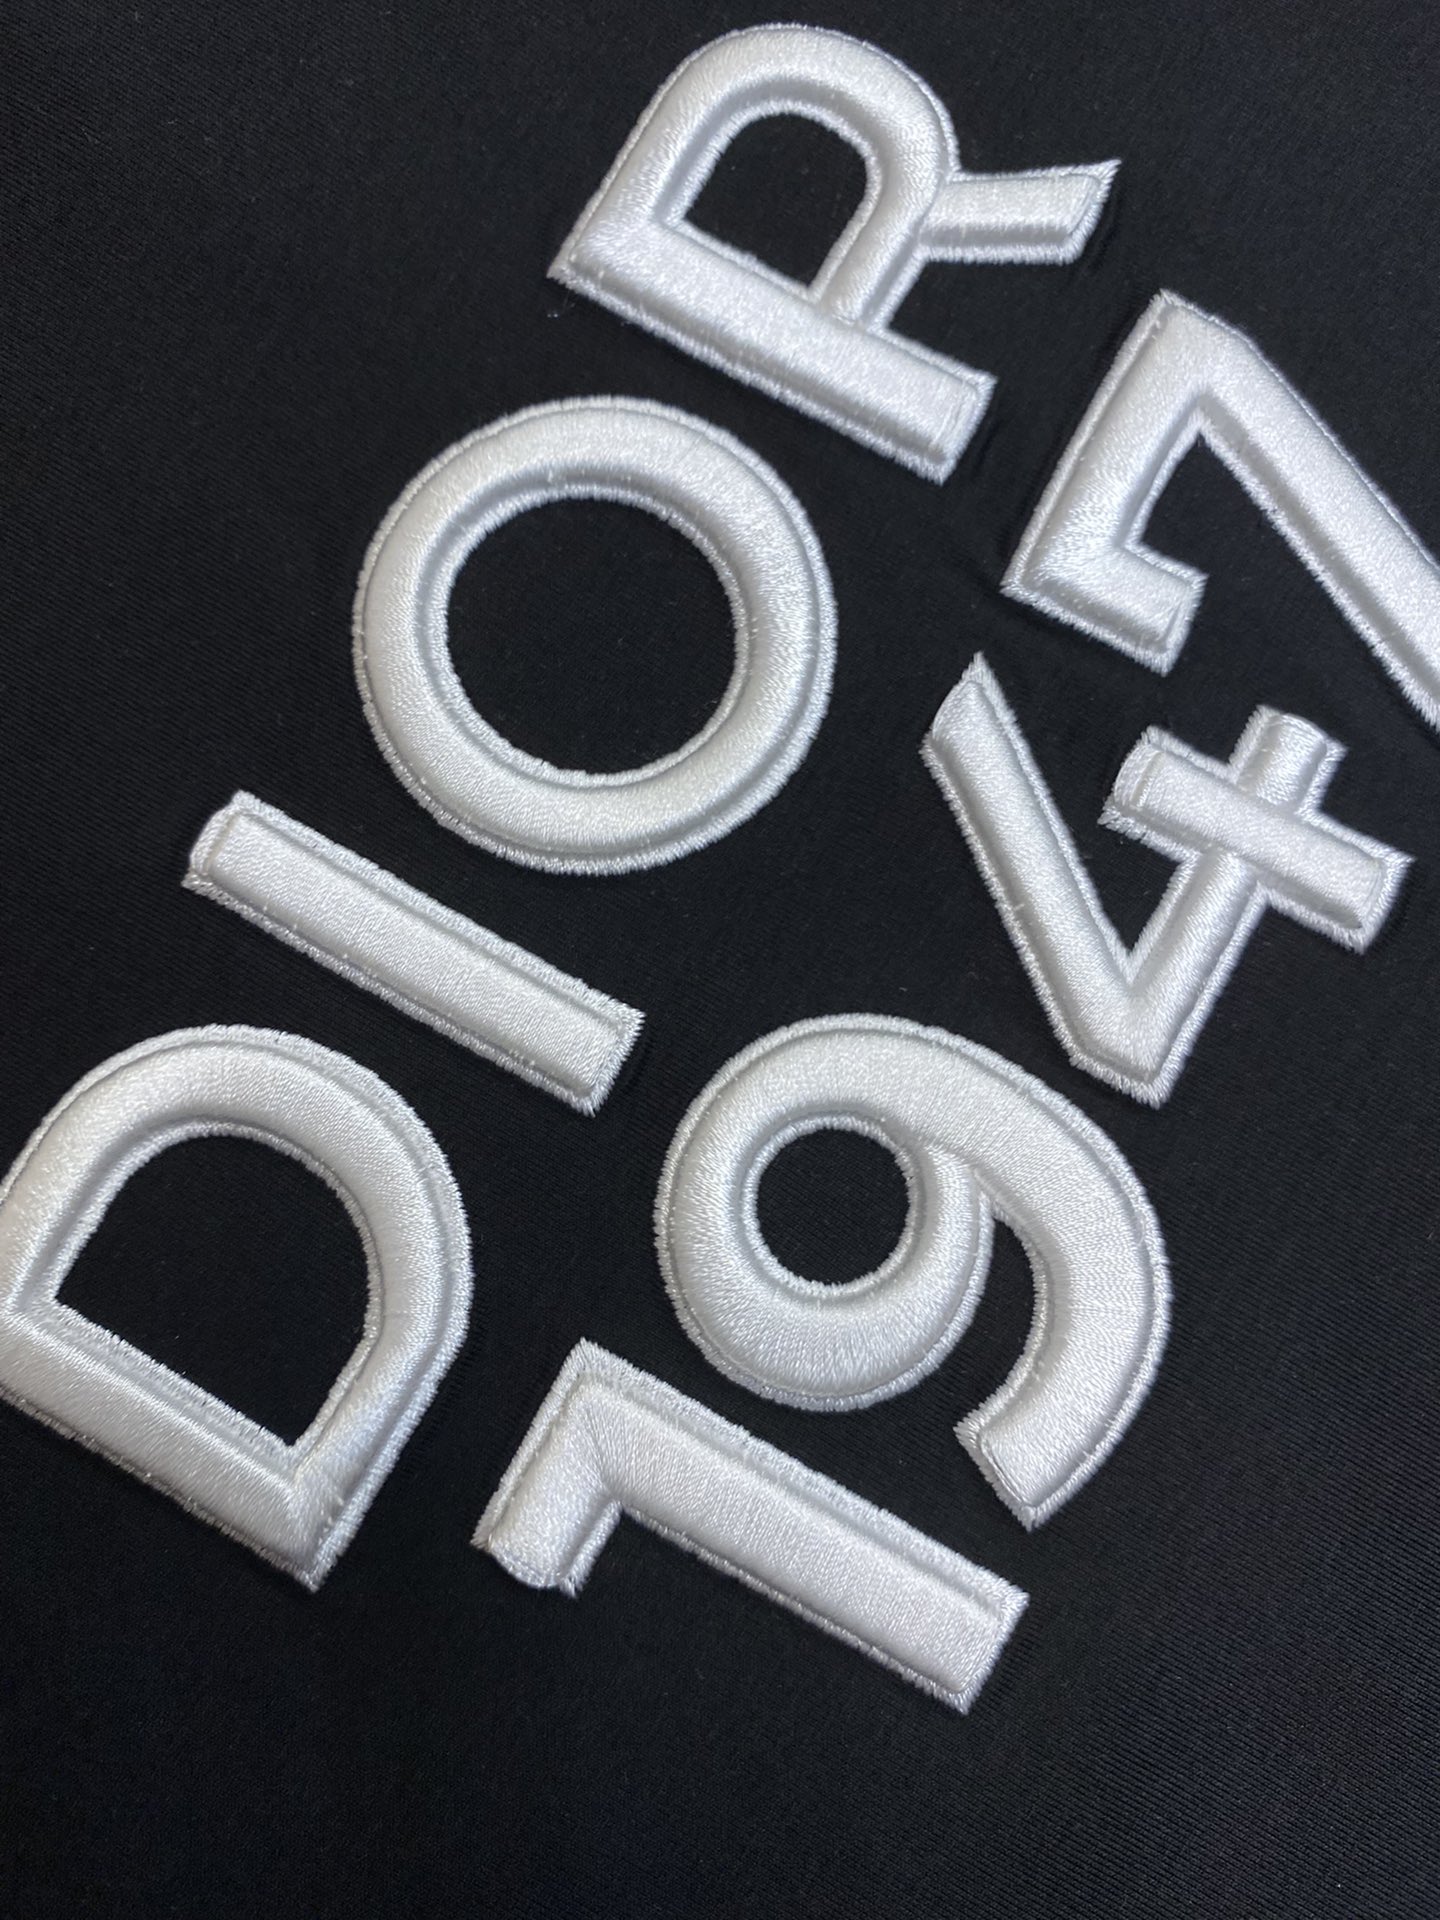 Dior新款短袖yyds日常出门闭眼搭定制丝光弹力棉面料短袖T恤魅力在于创造了简约奢华感的时尚,随意搭配